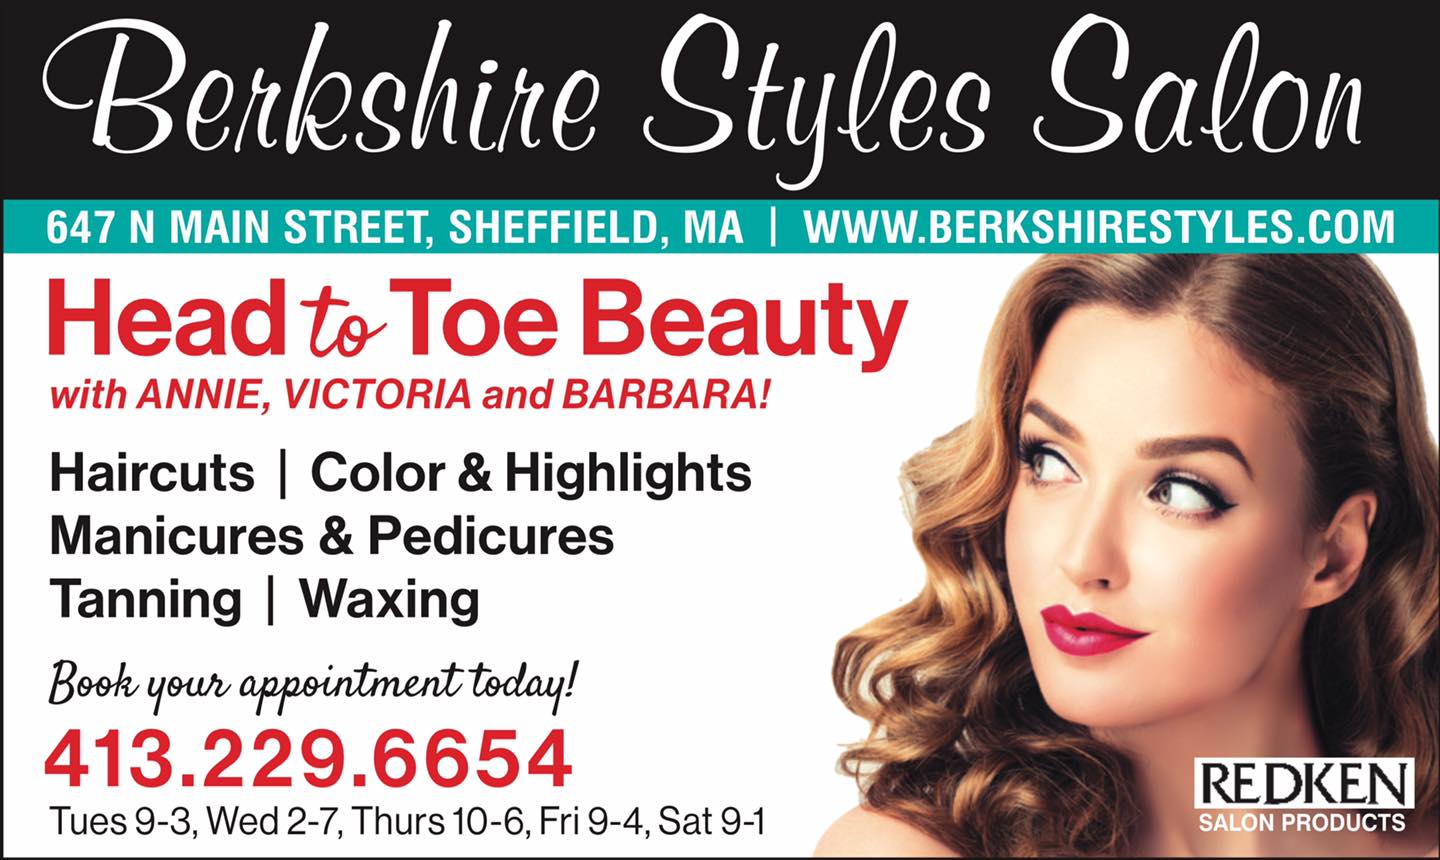 Berkshire Styles Salon 647 N Main St, Sheffield Massachusetts 01257